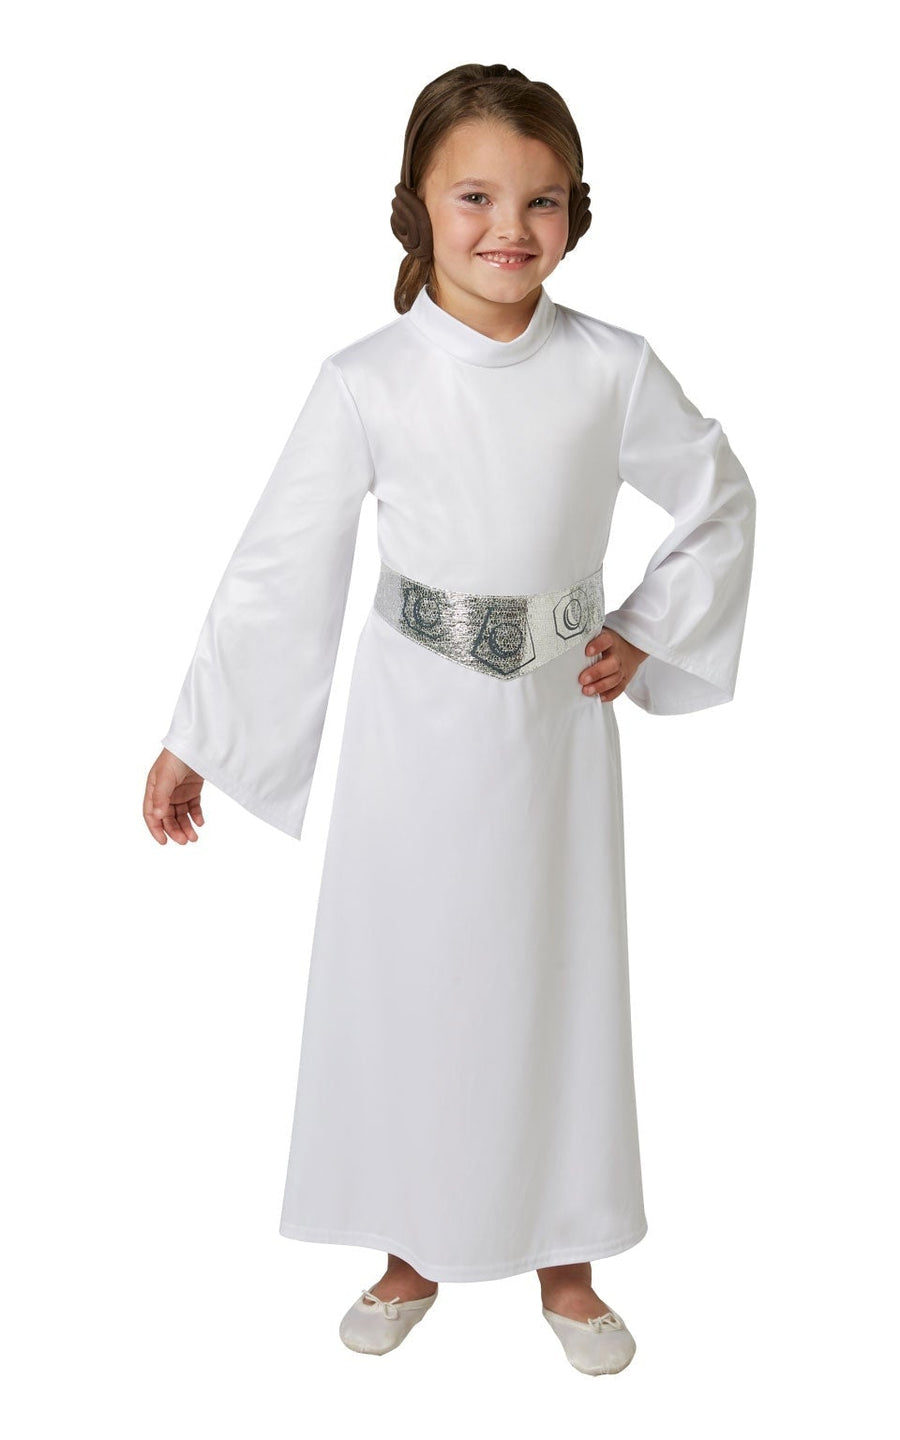 Princess Leia Costume for Kids Disney Classic Star Wars_1